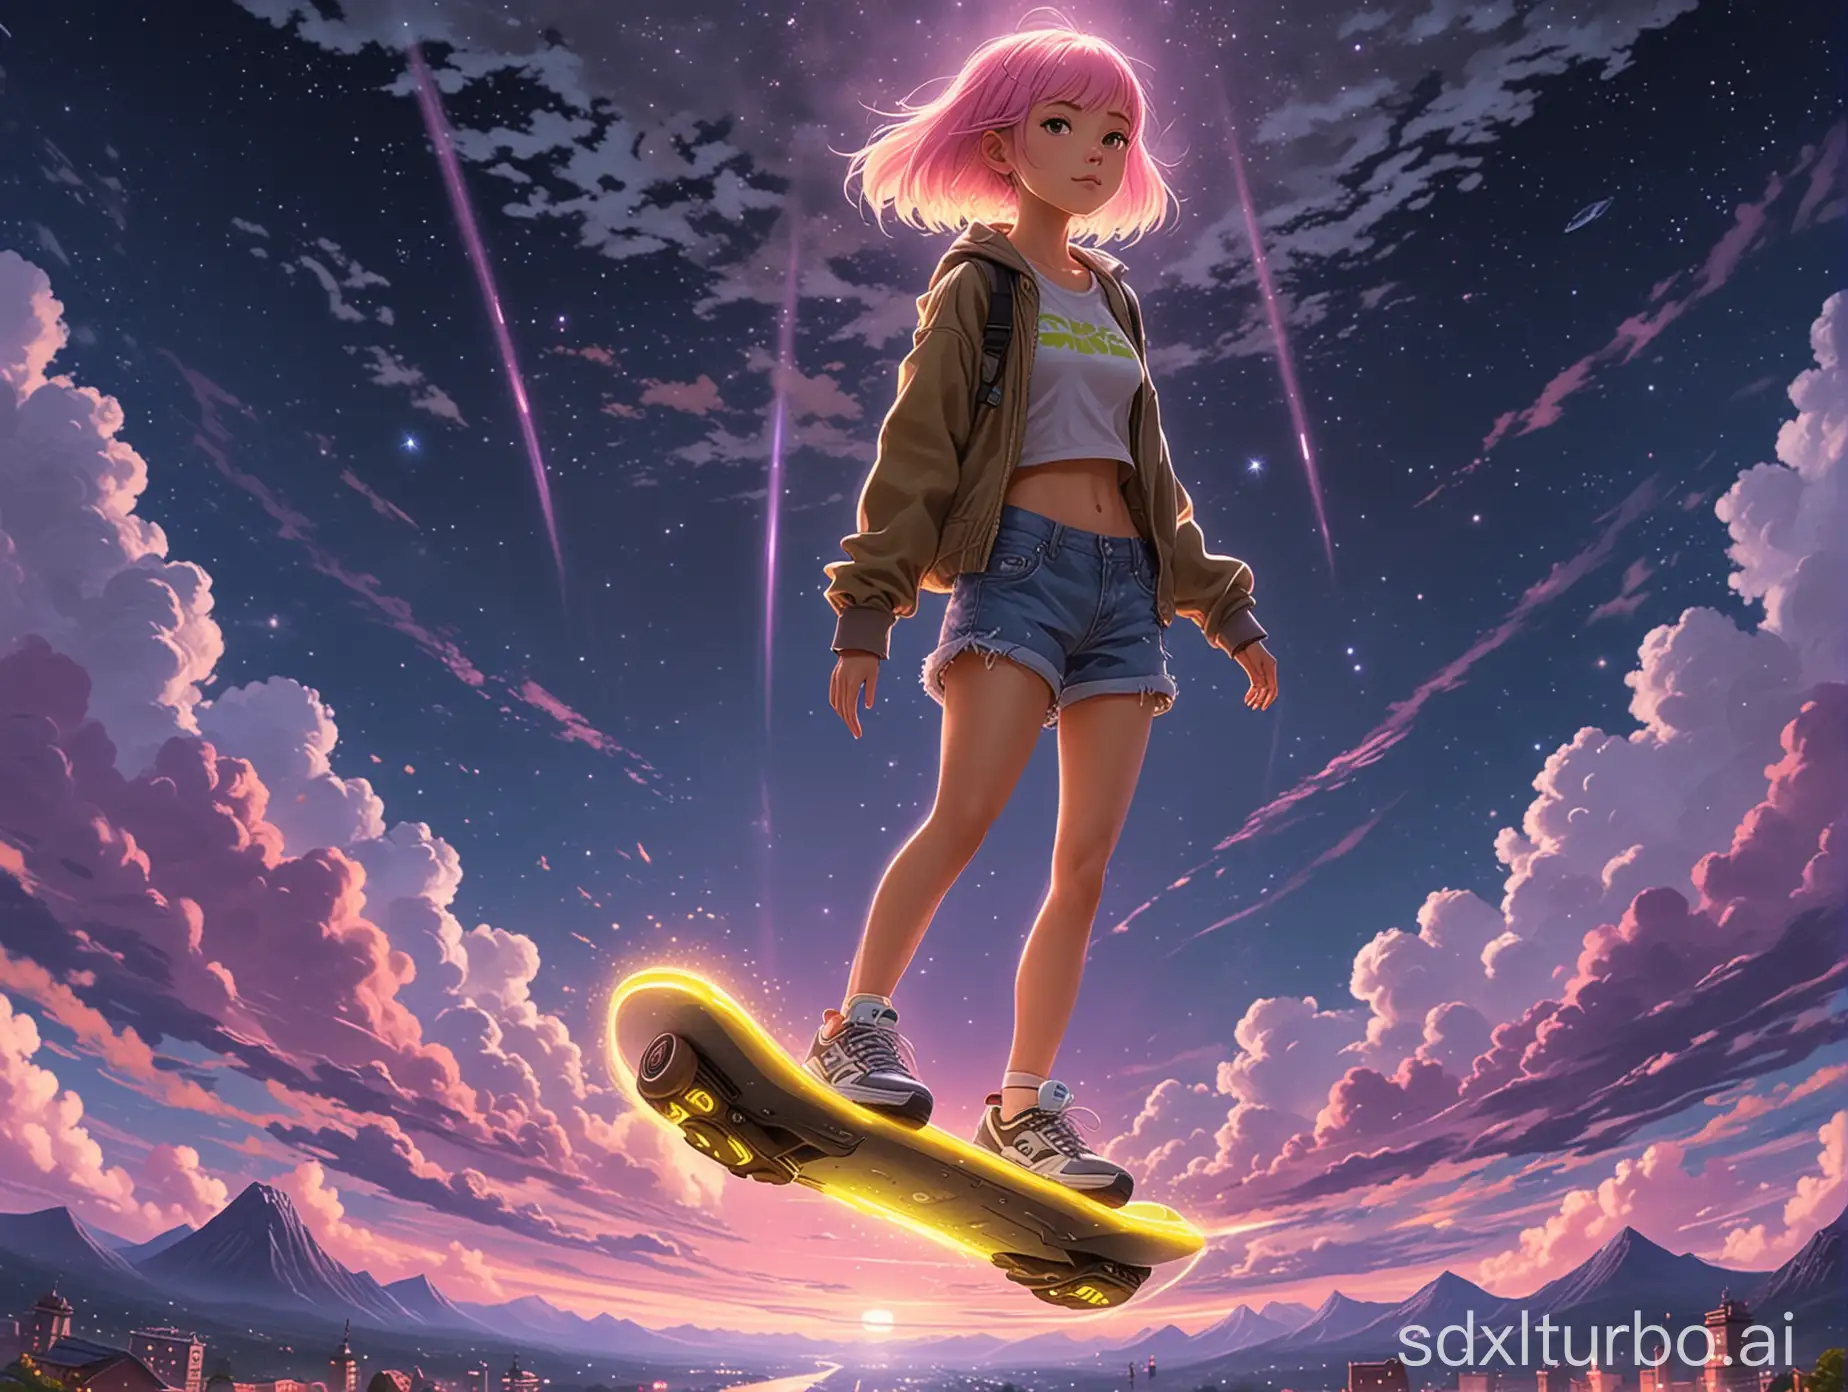 Tan-Girl-Riding-Futuristic-Hoverboard-Under-Starlit-Sky-Ghibli-Anime-Inspired-Art